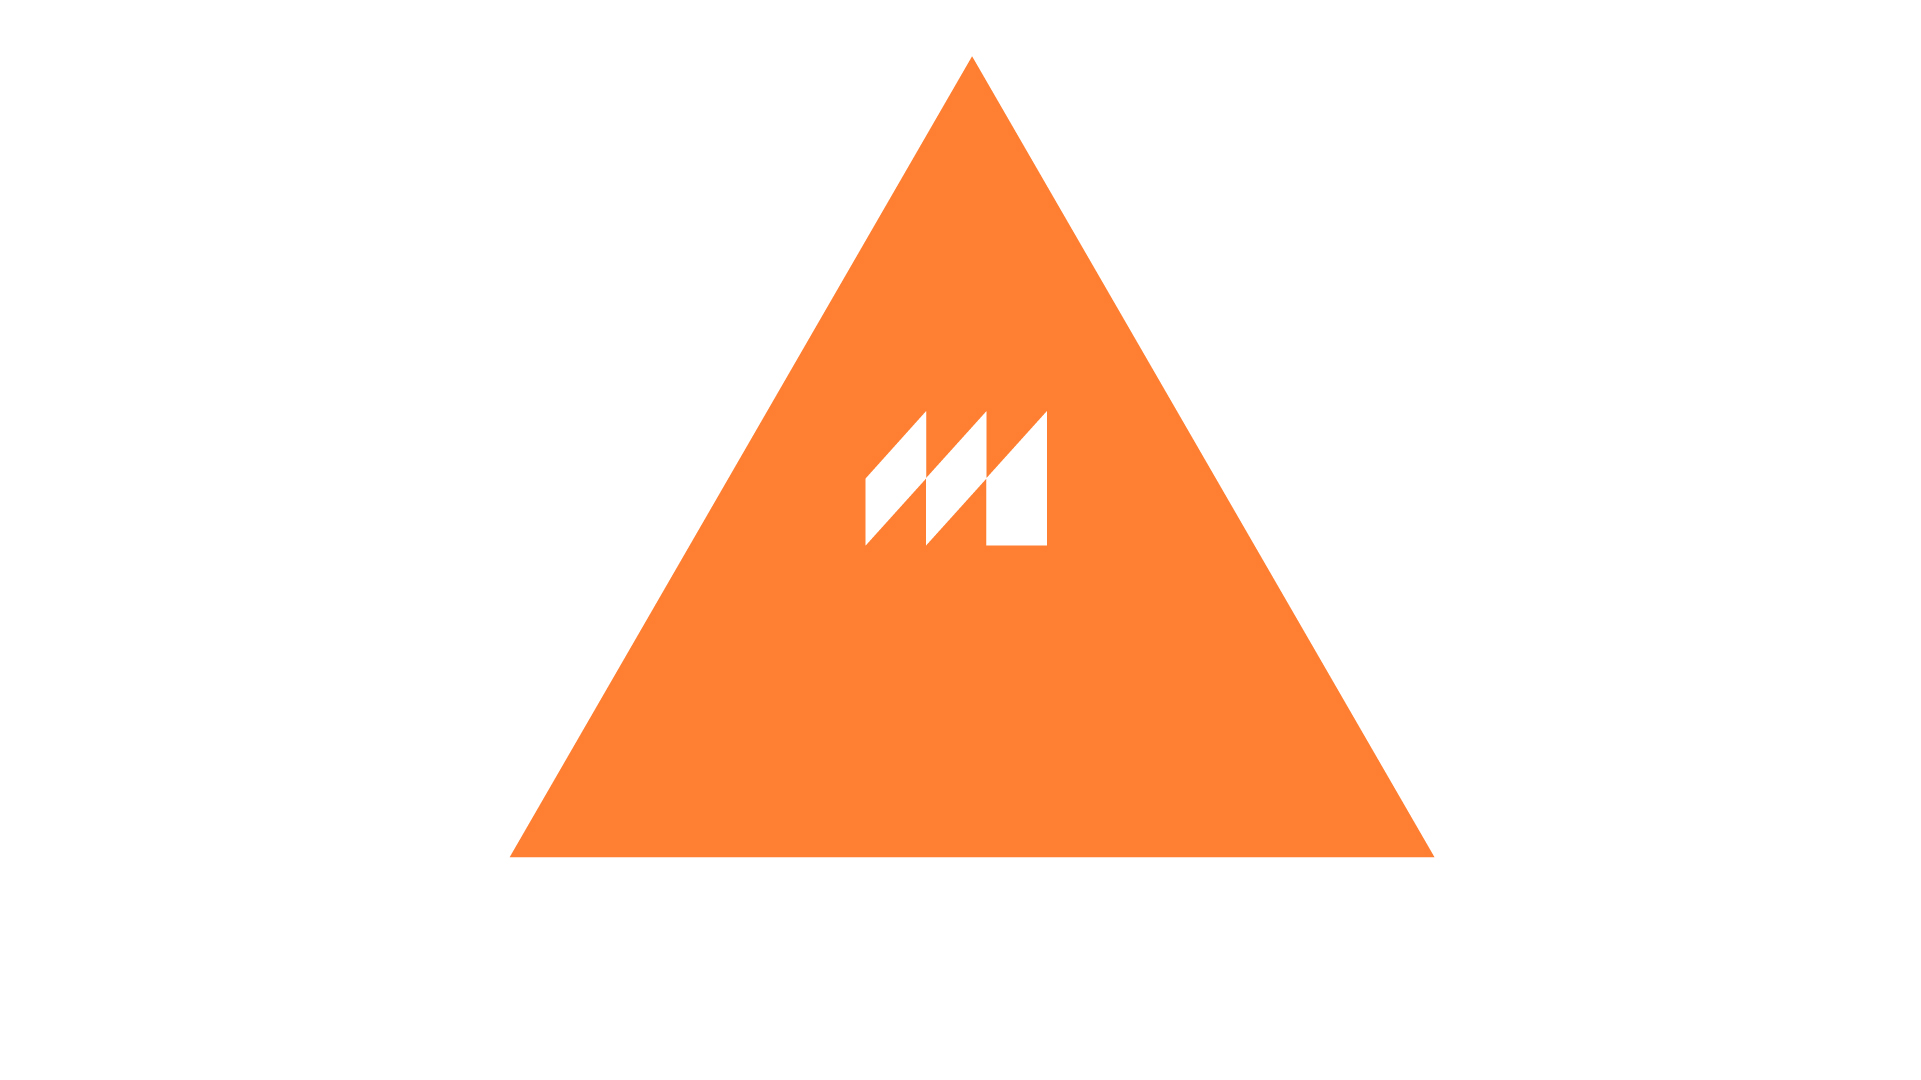 Mr mozart. Логотип ютуб в оранжевом цвете на прозрачном фоне.